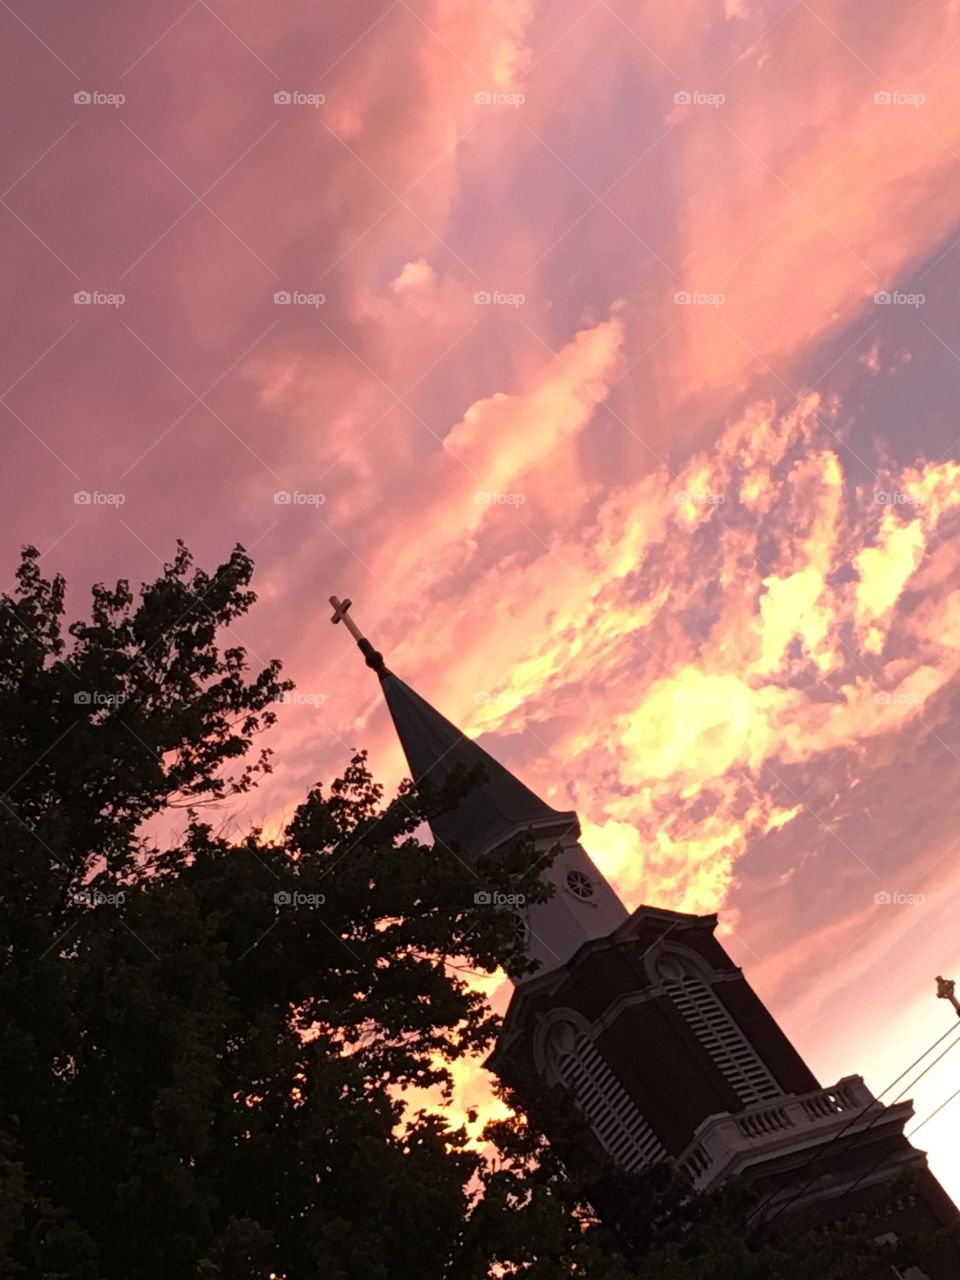 Sunset surrounding the church steeple